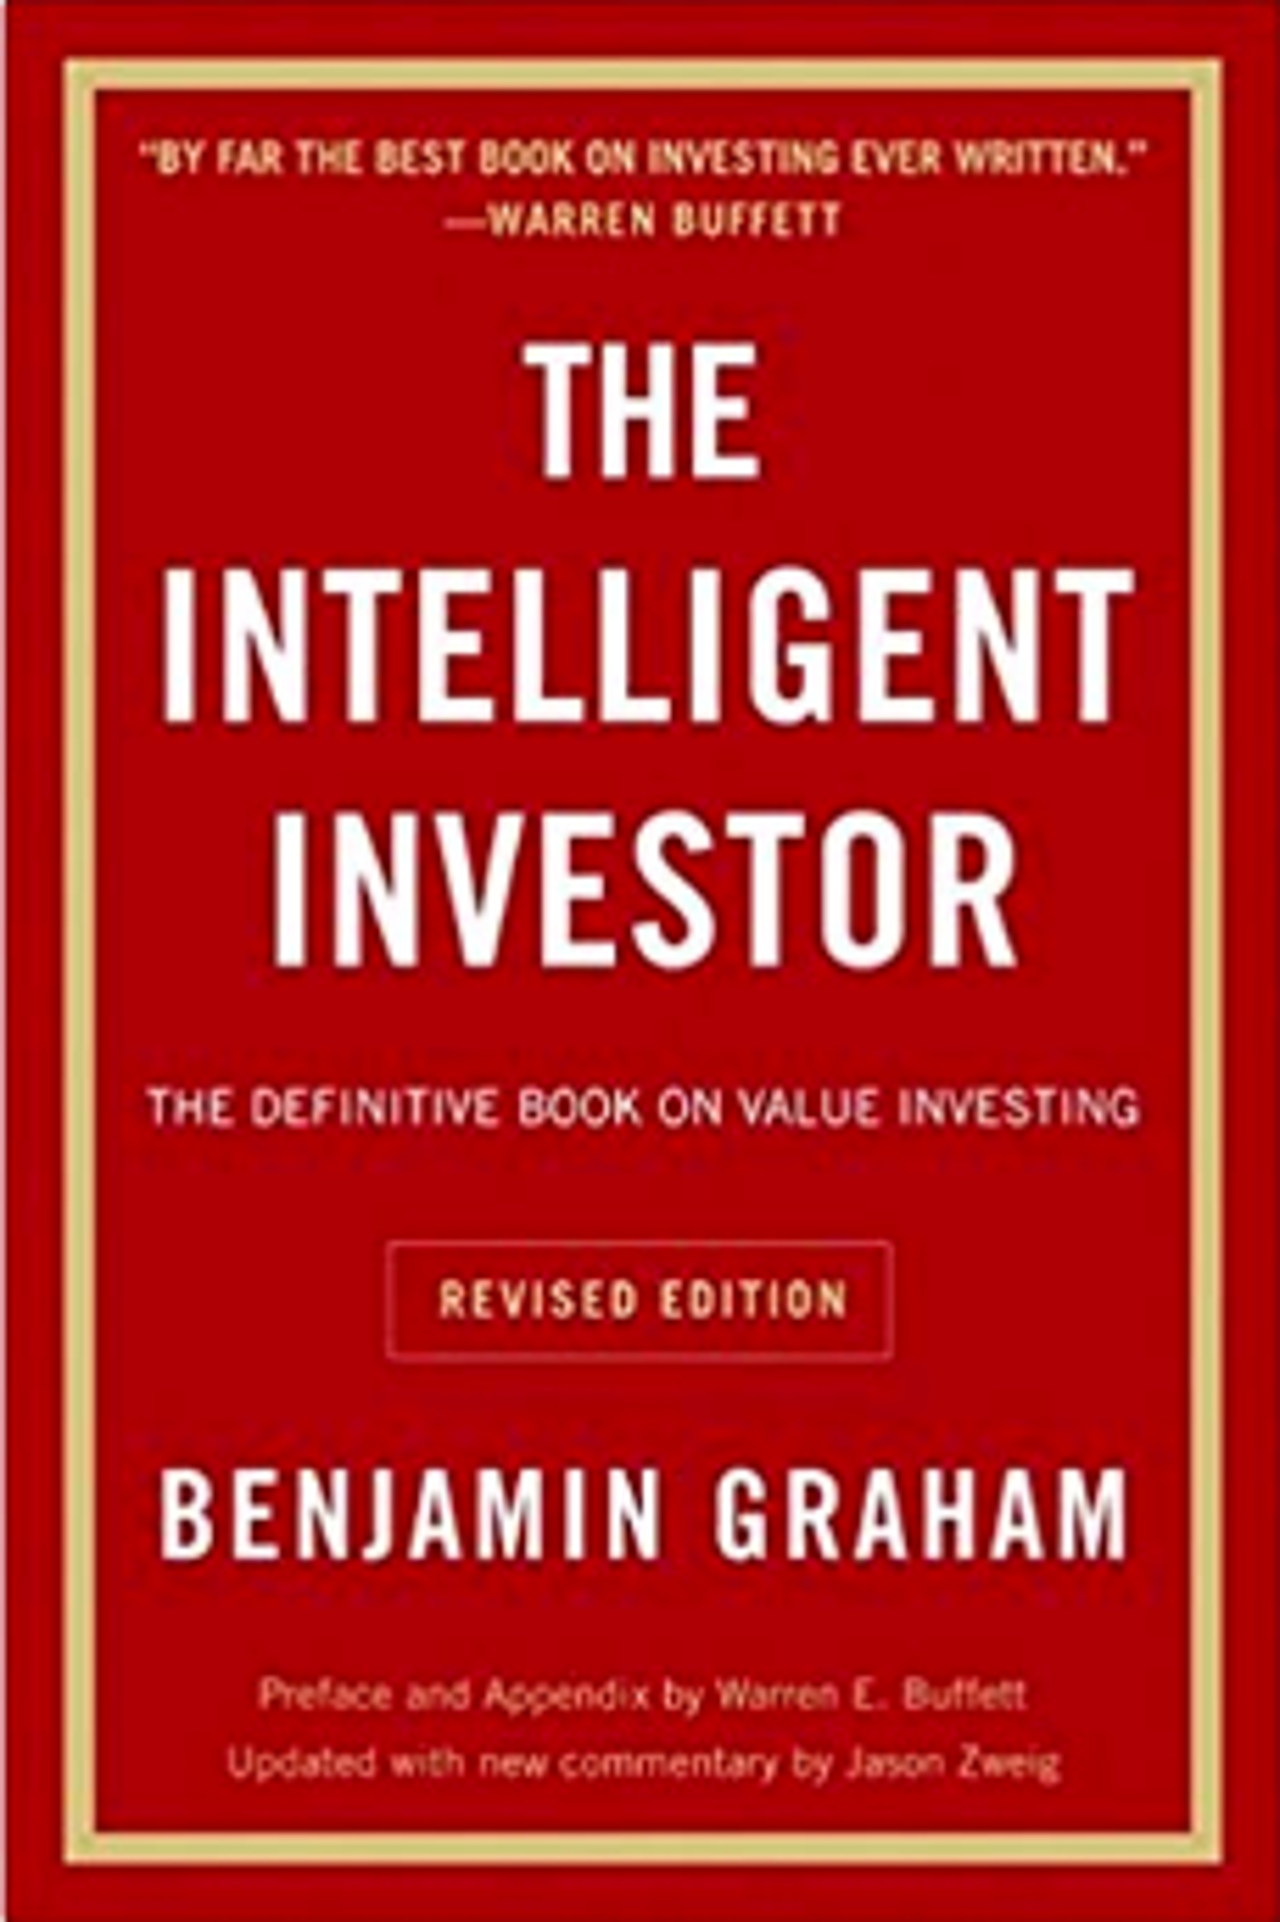 Buy The Intelligent Investor on Amazon